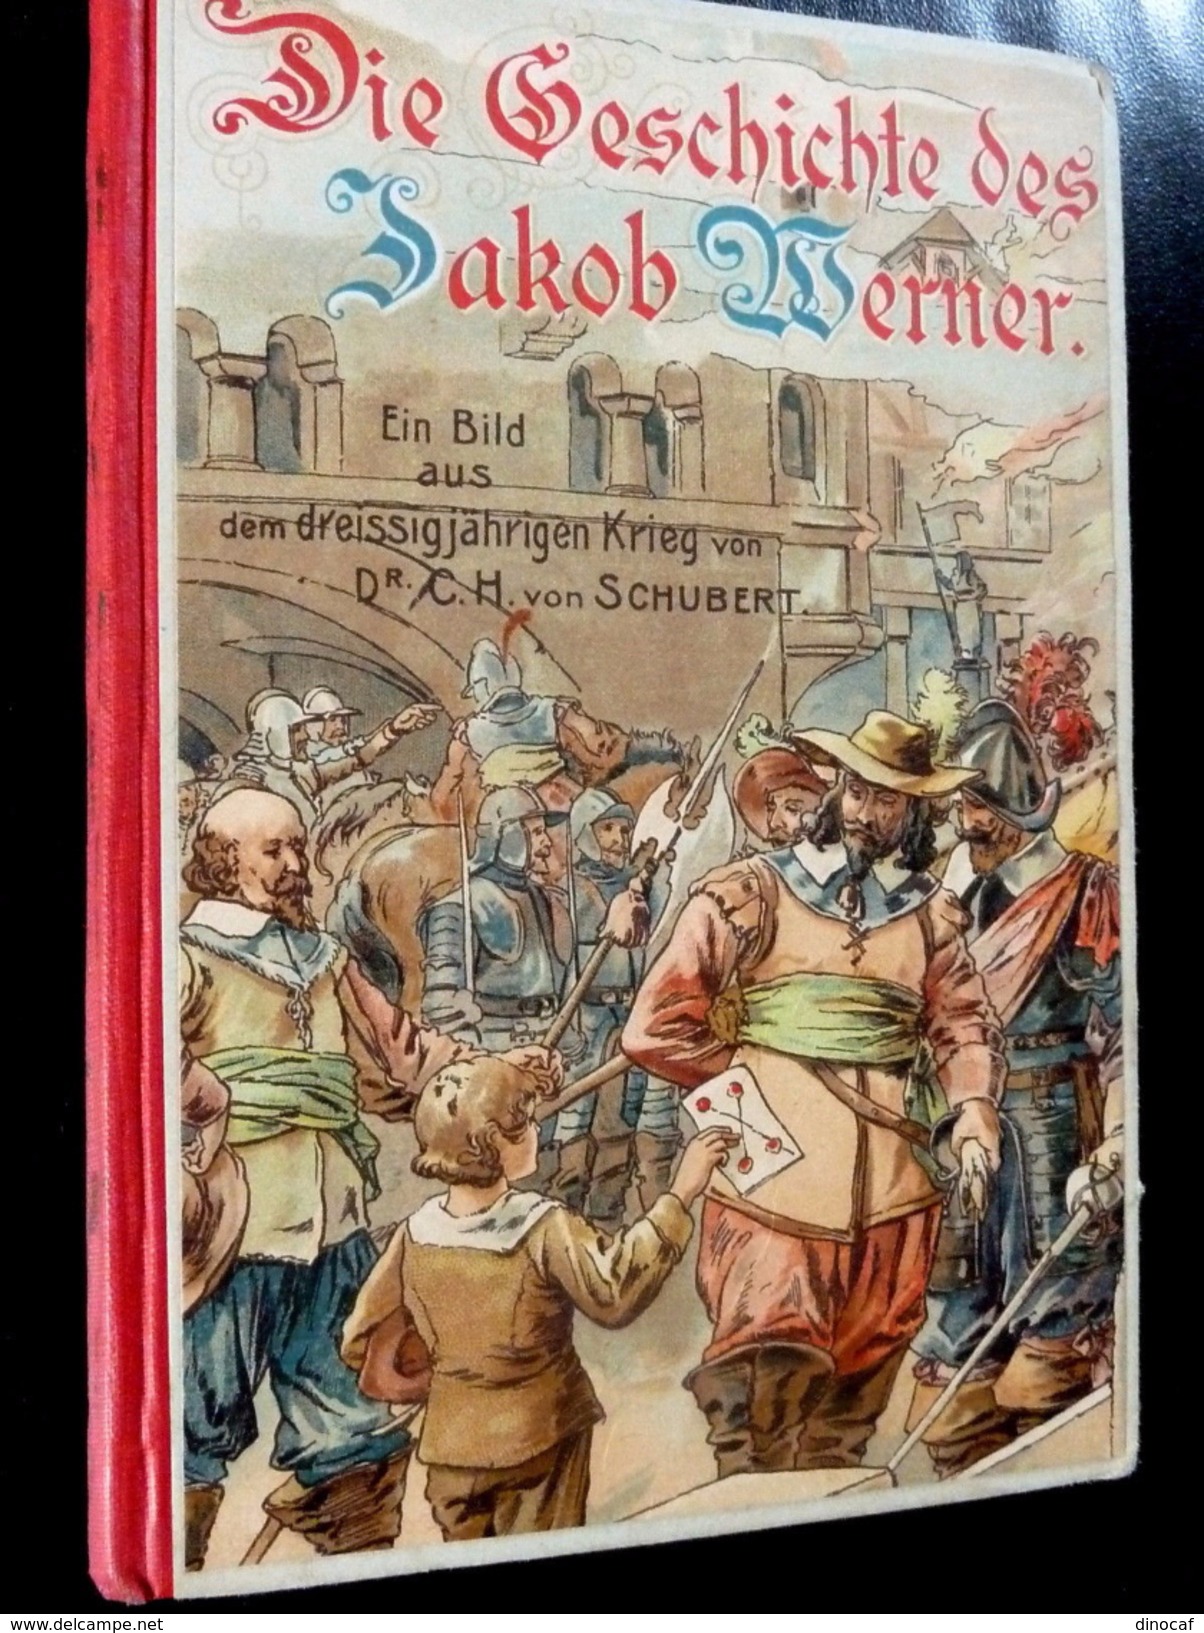 Schubert: Storia Del Jakob Werner Per 1900 Rares Originale Dell'epoca! - Alte Bücher